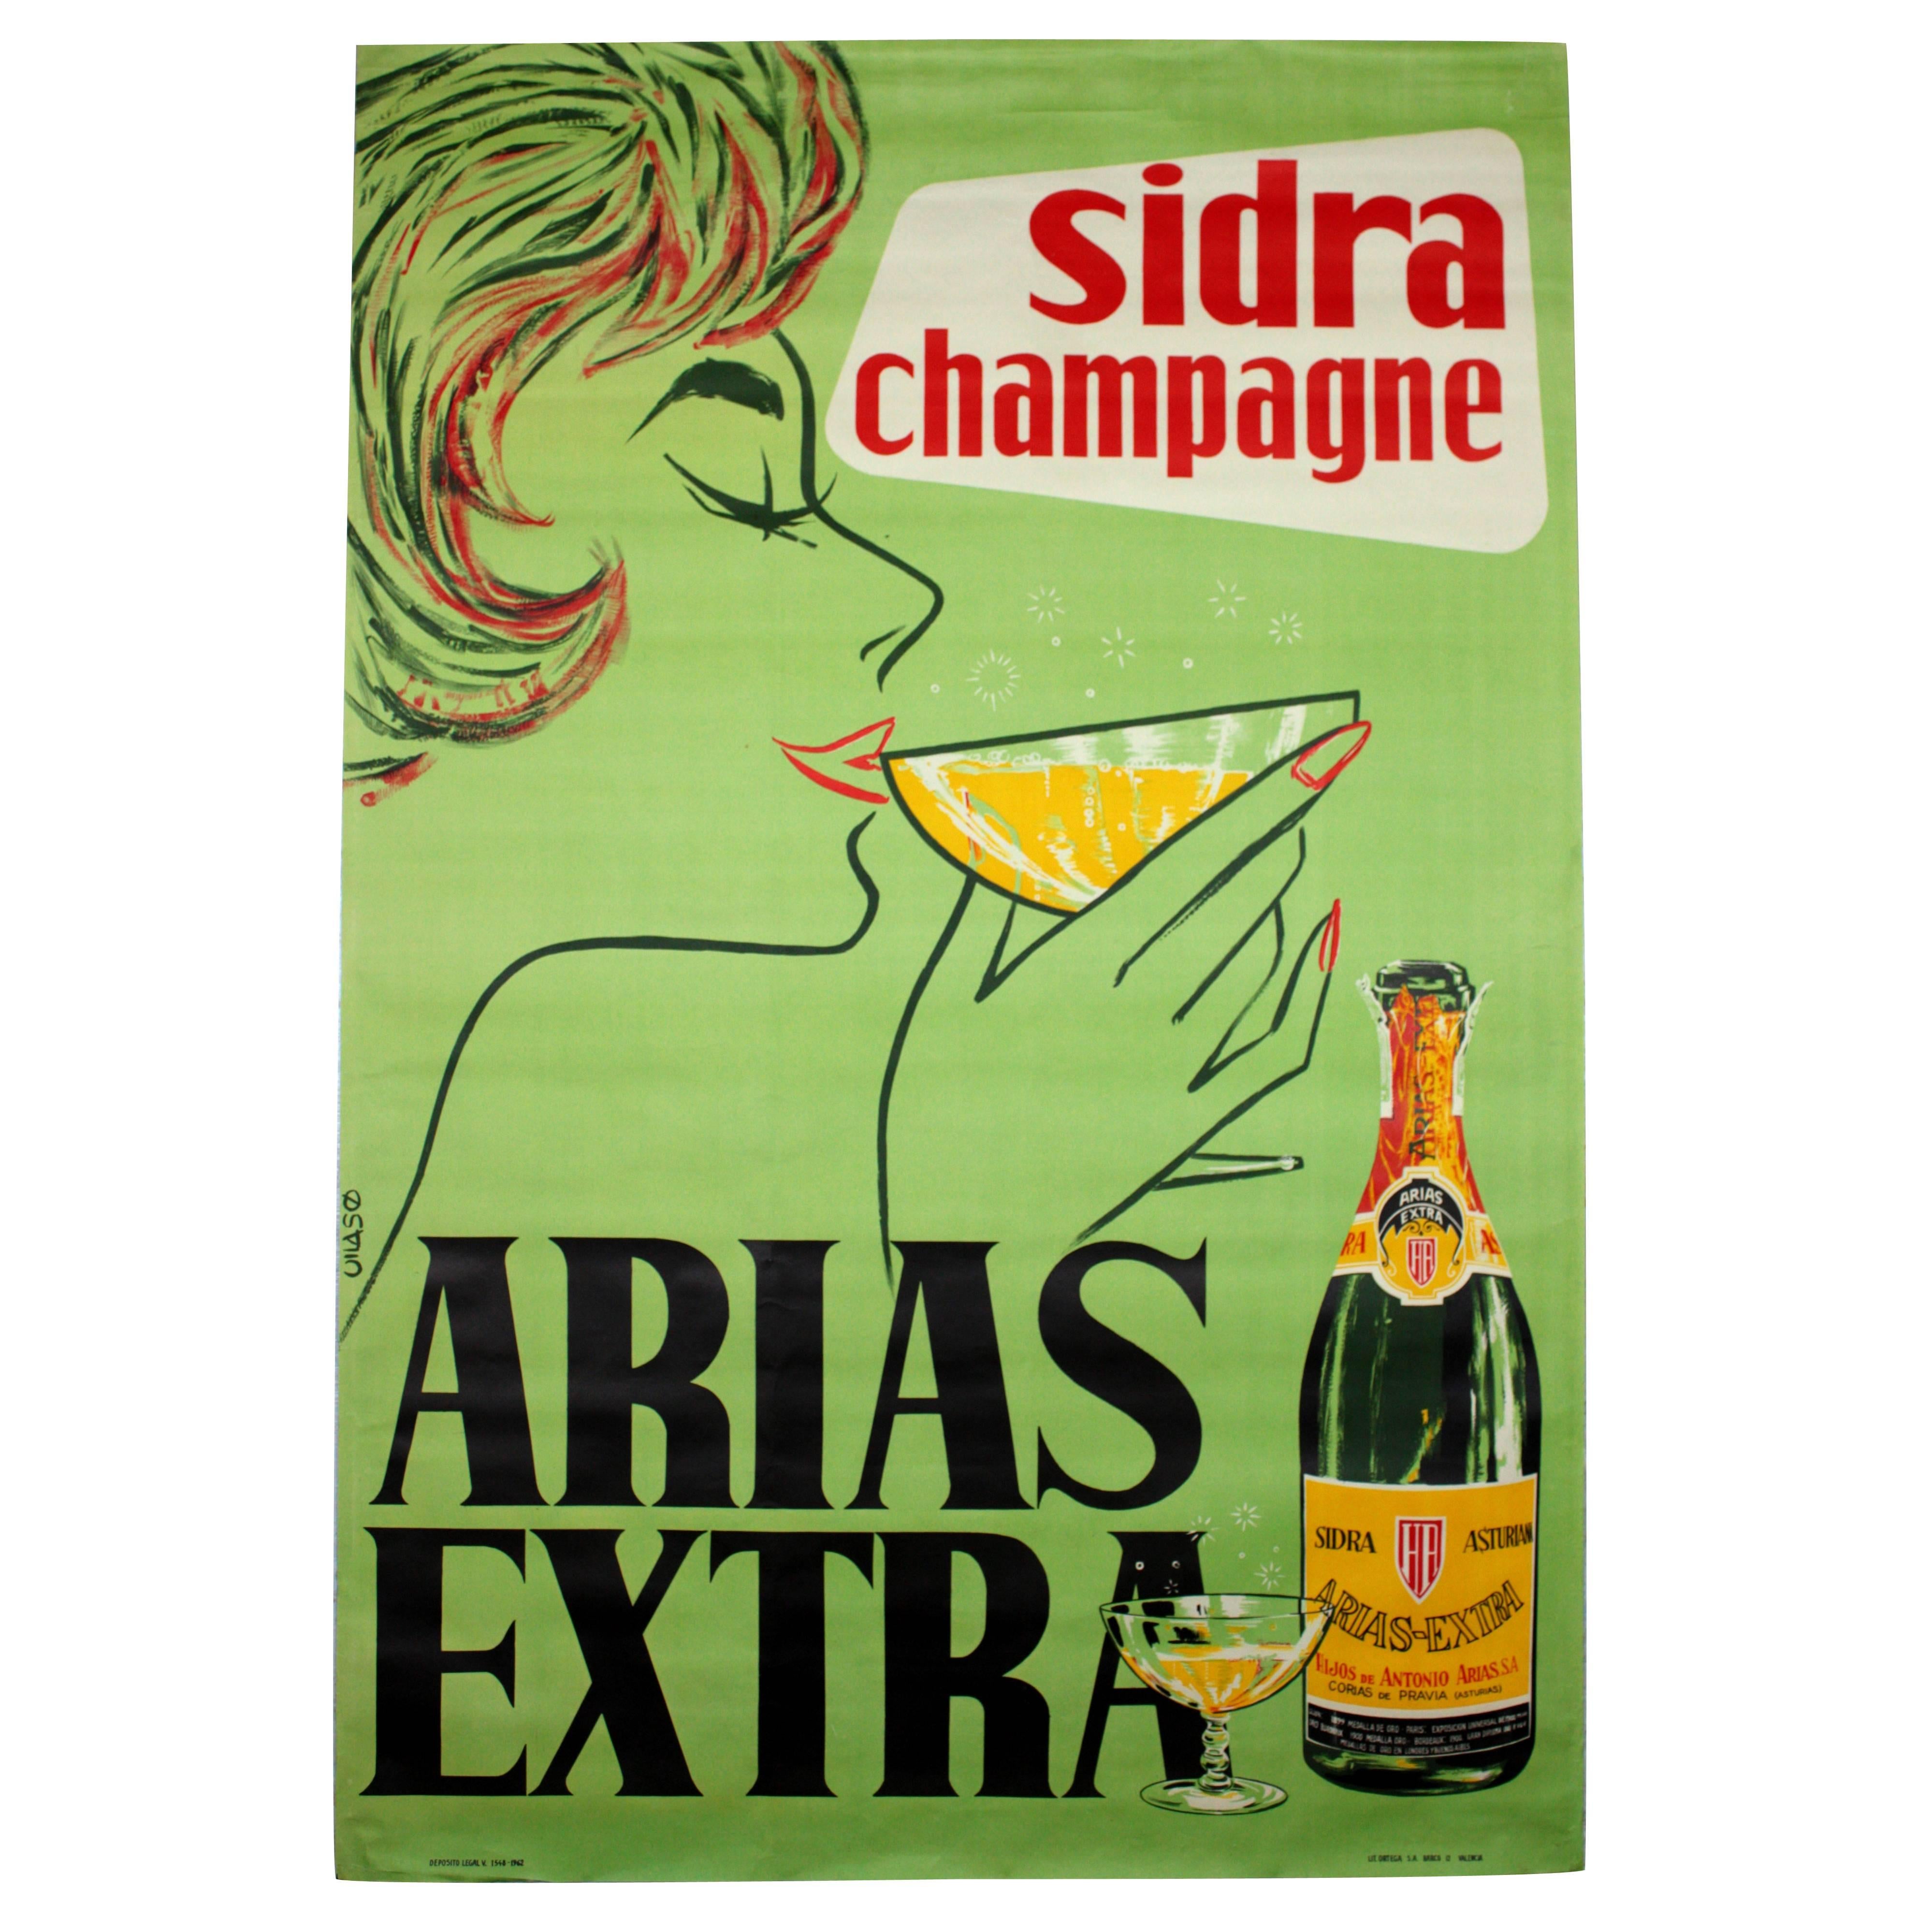 Original Vintage 1962 Advertising Poster: Sidra Champagne Arias Extra by Vilaso